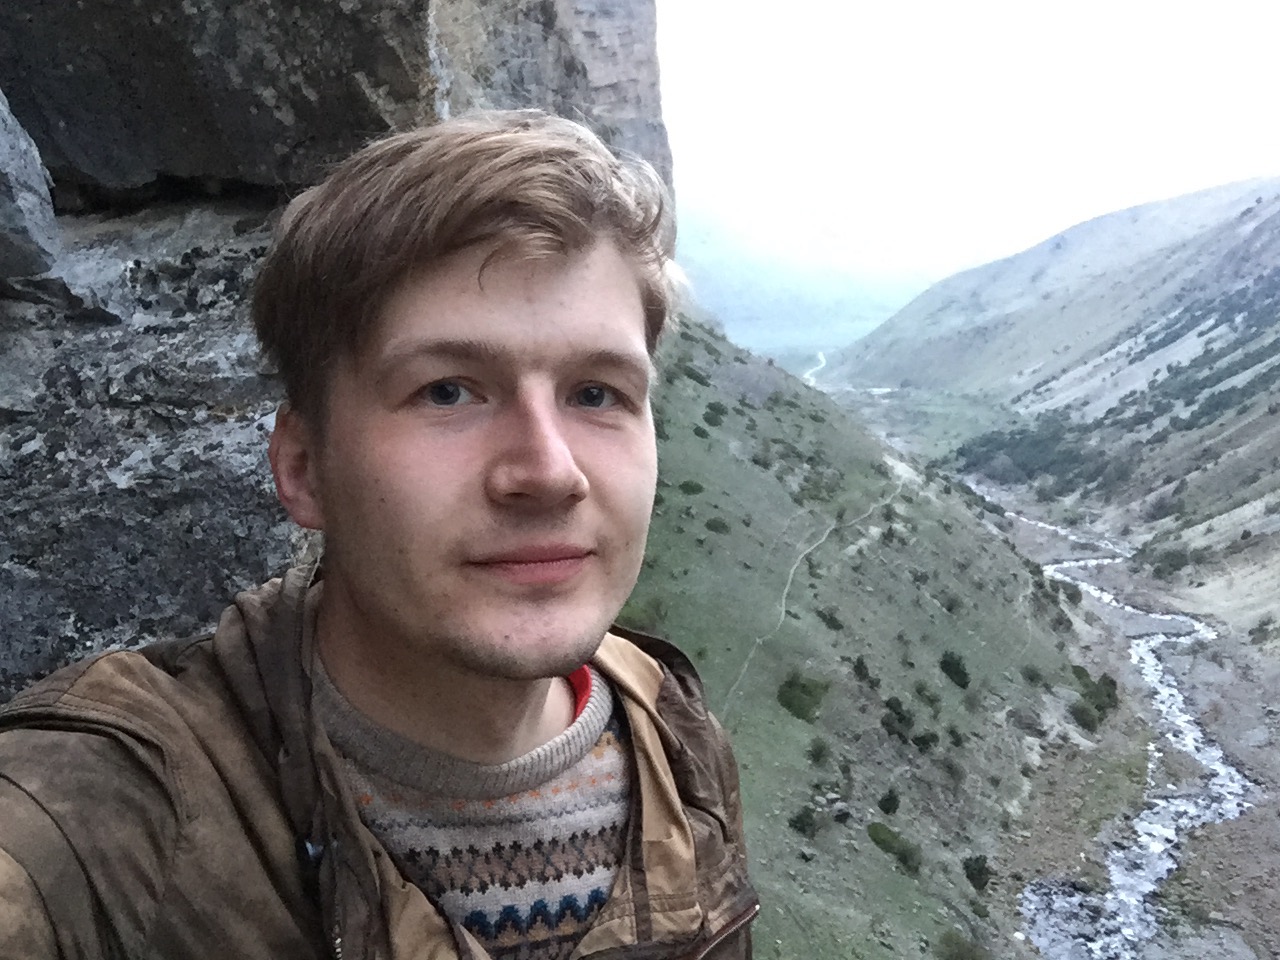 Selfie on the precipice